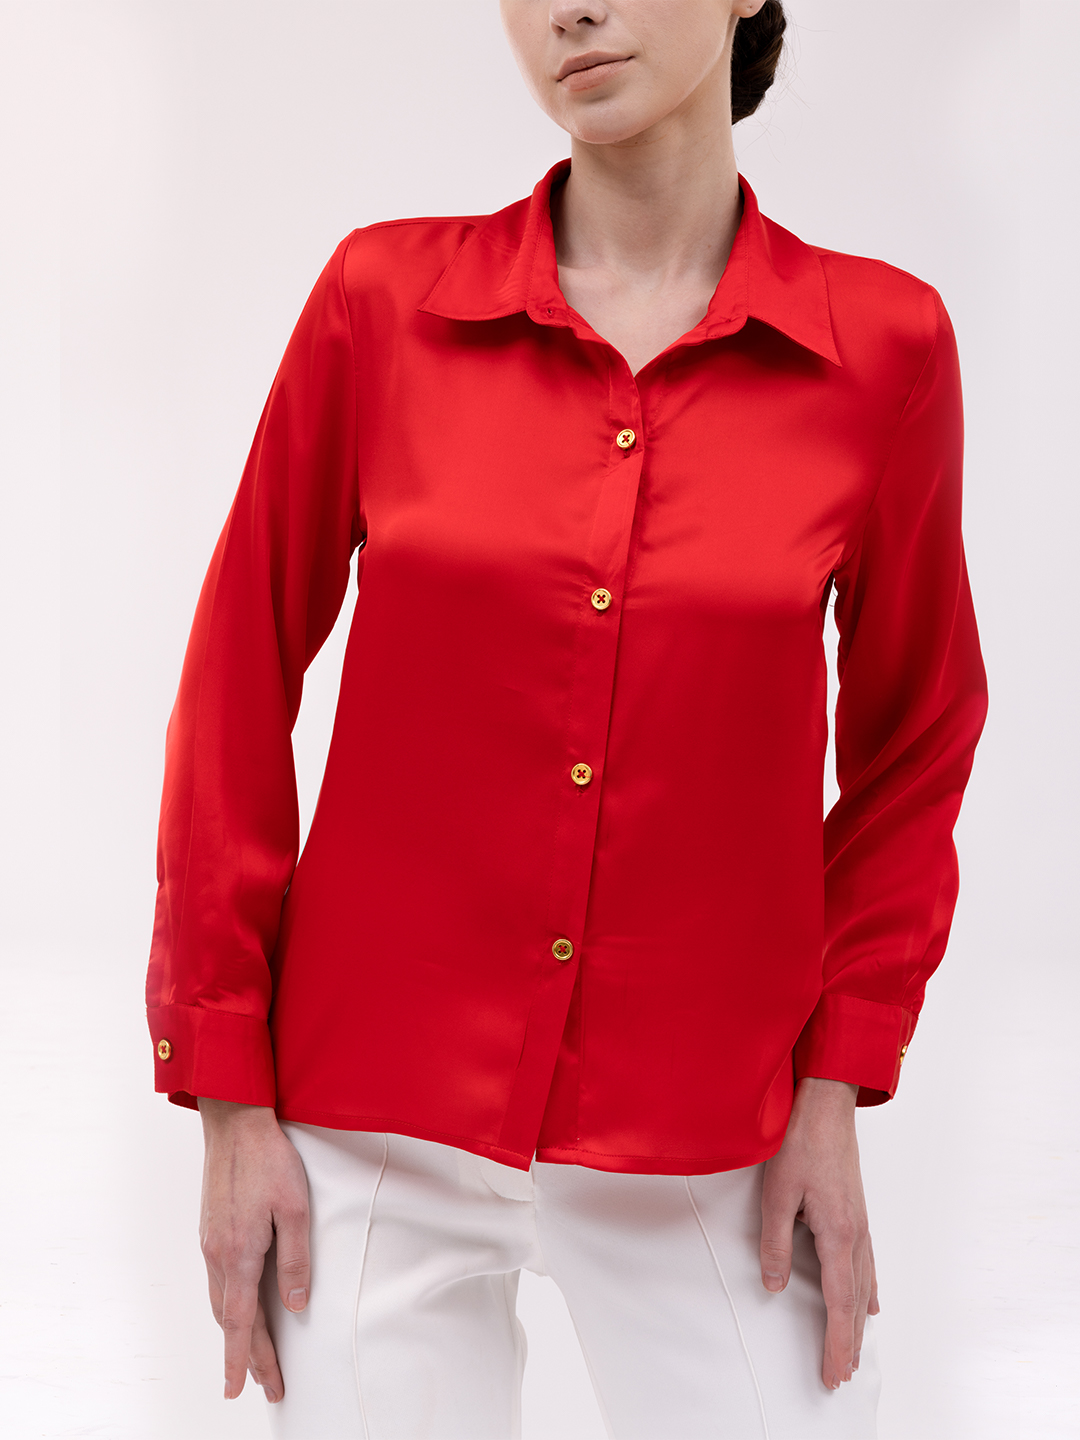 Red 9-5 Sleek Shirt -3